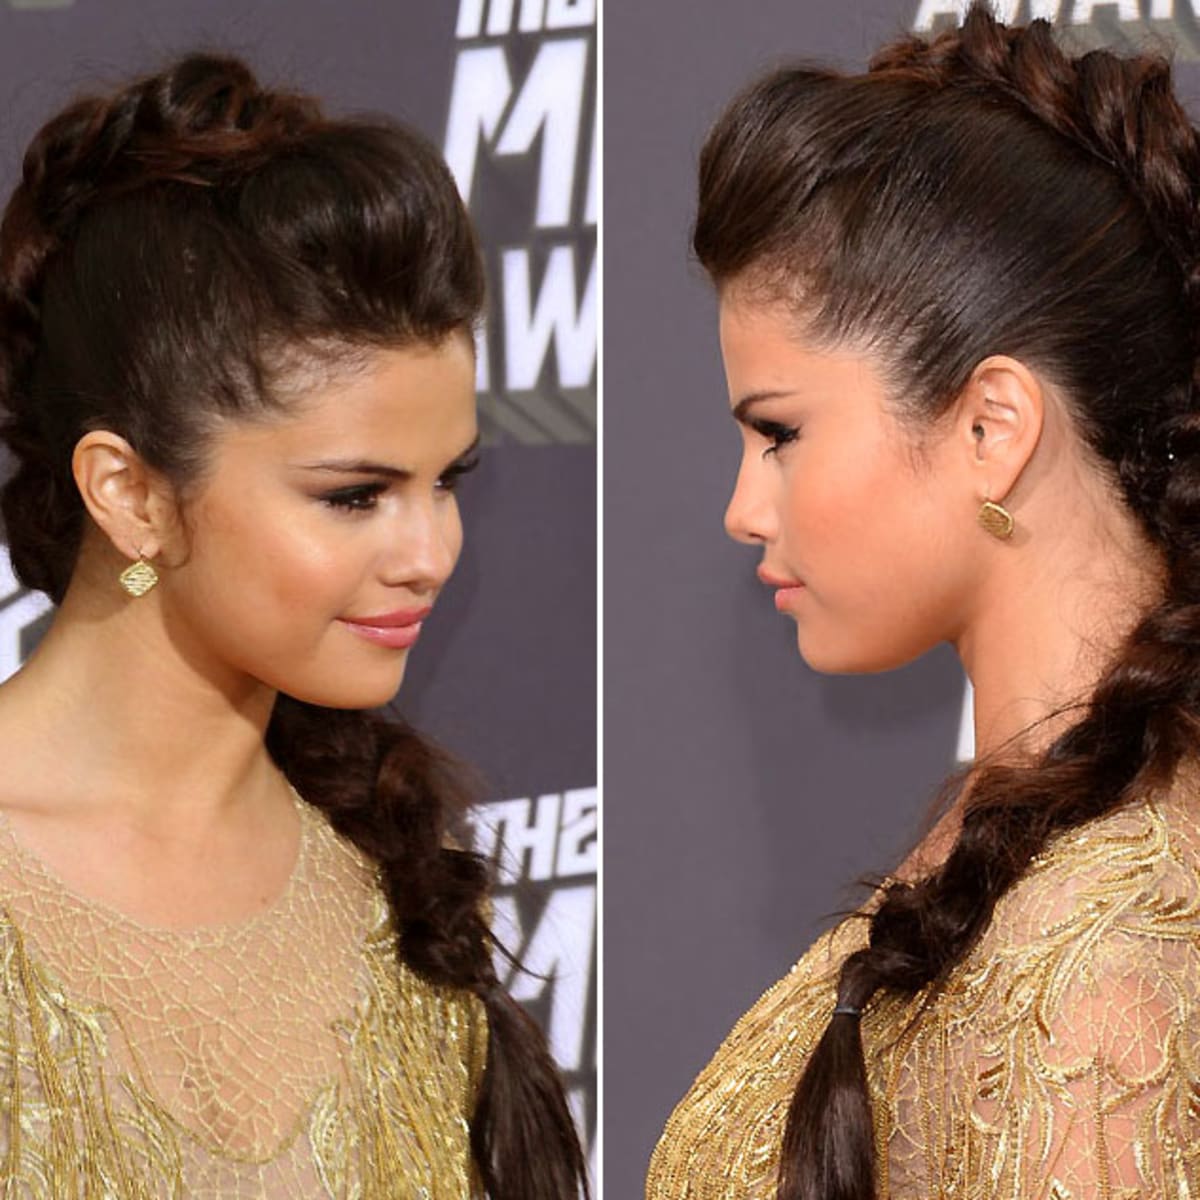 Selena Gomez Posing With Tied Hair 8x10 Picture Celebrity Print | eBay